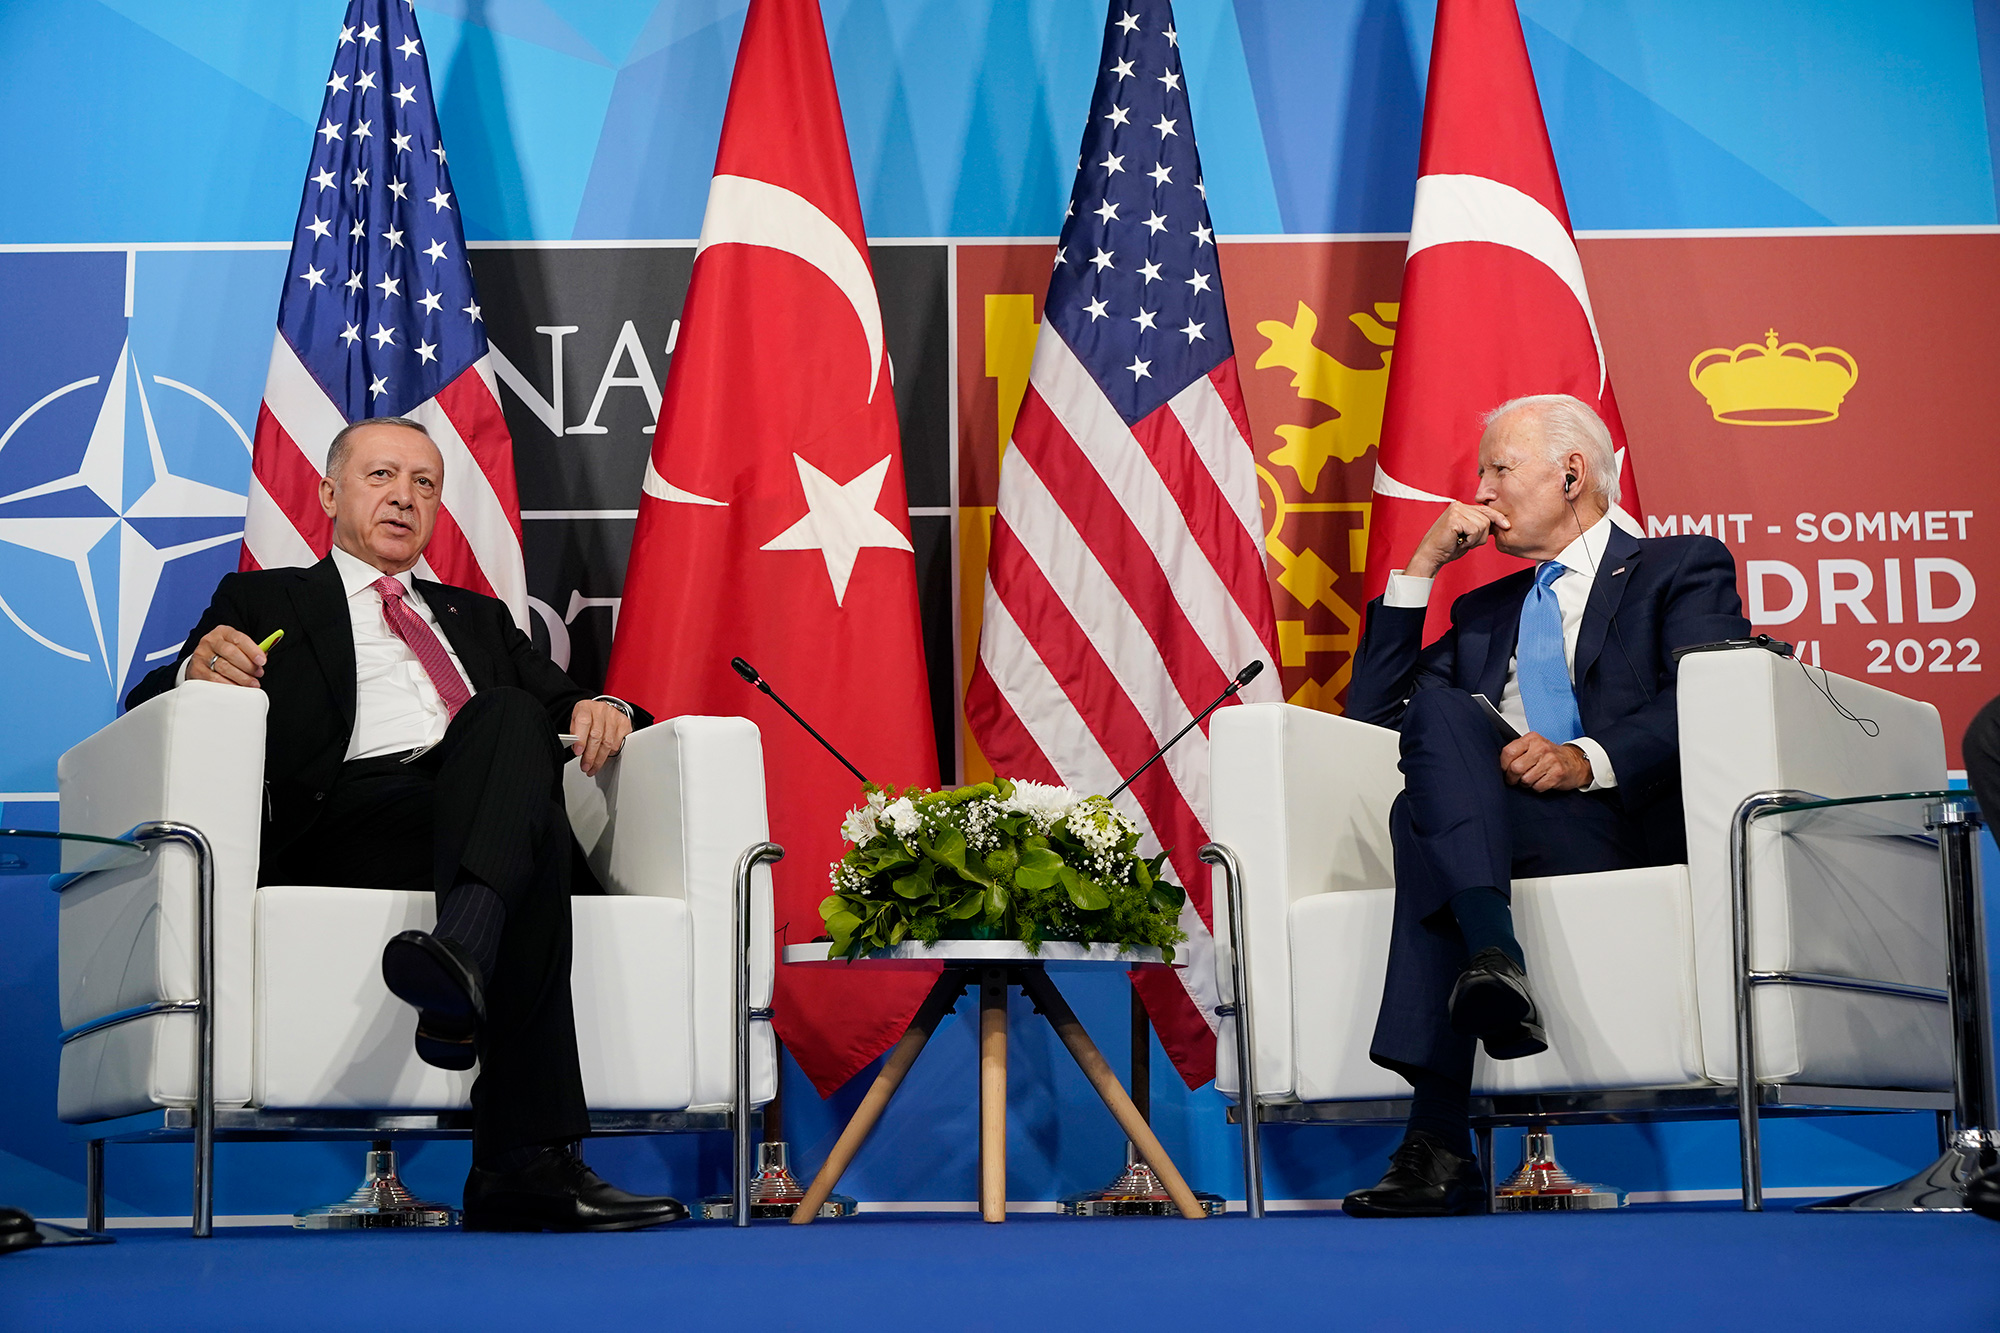 President Joe Biden, right, meets with Turkey's President Recep Tayyip Erdogan during the NATO summit in Madrid, Spain, on Wednesday, June 29.